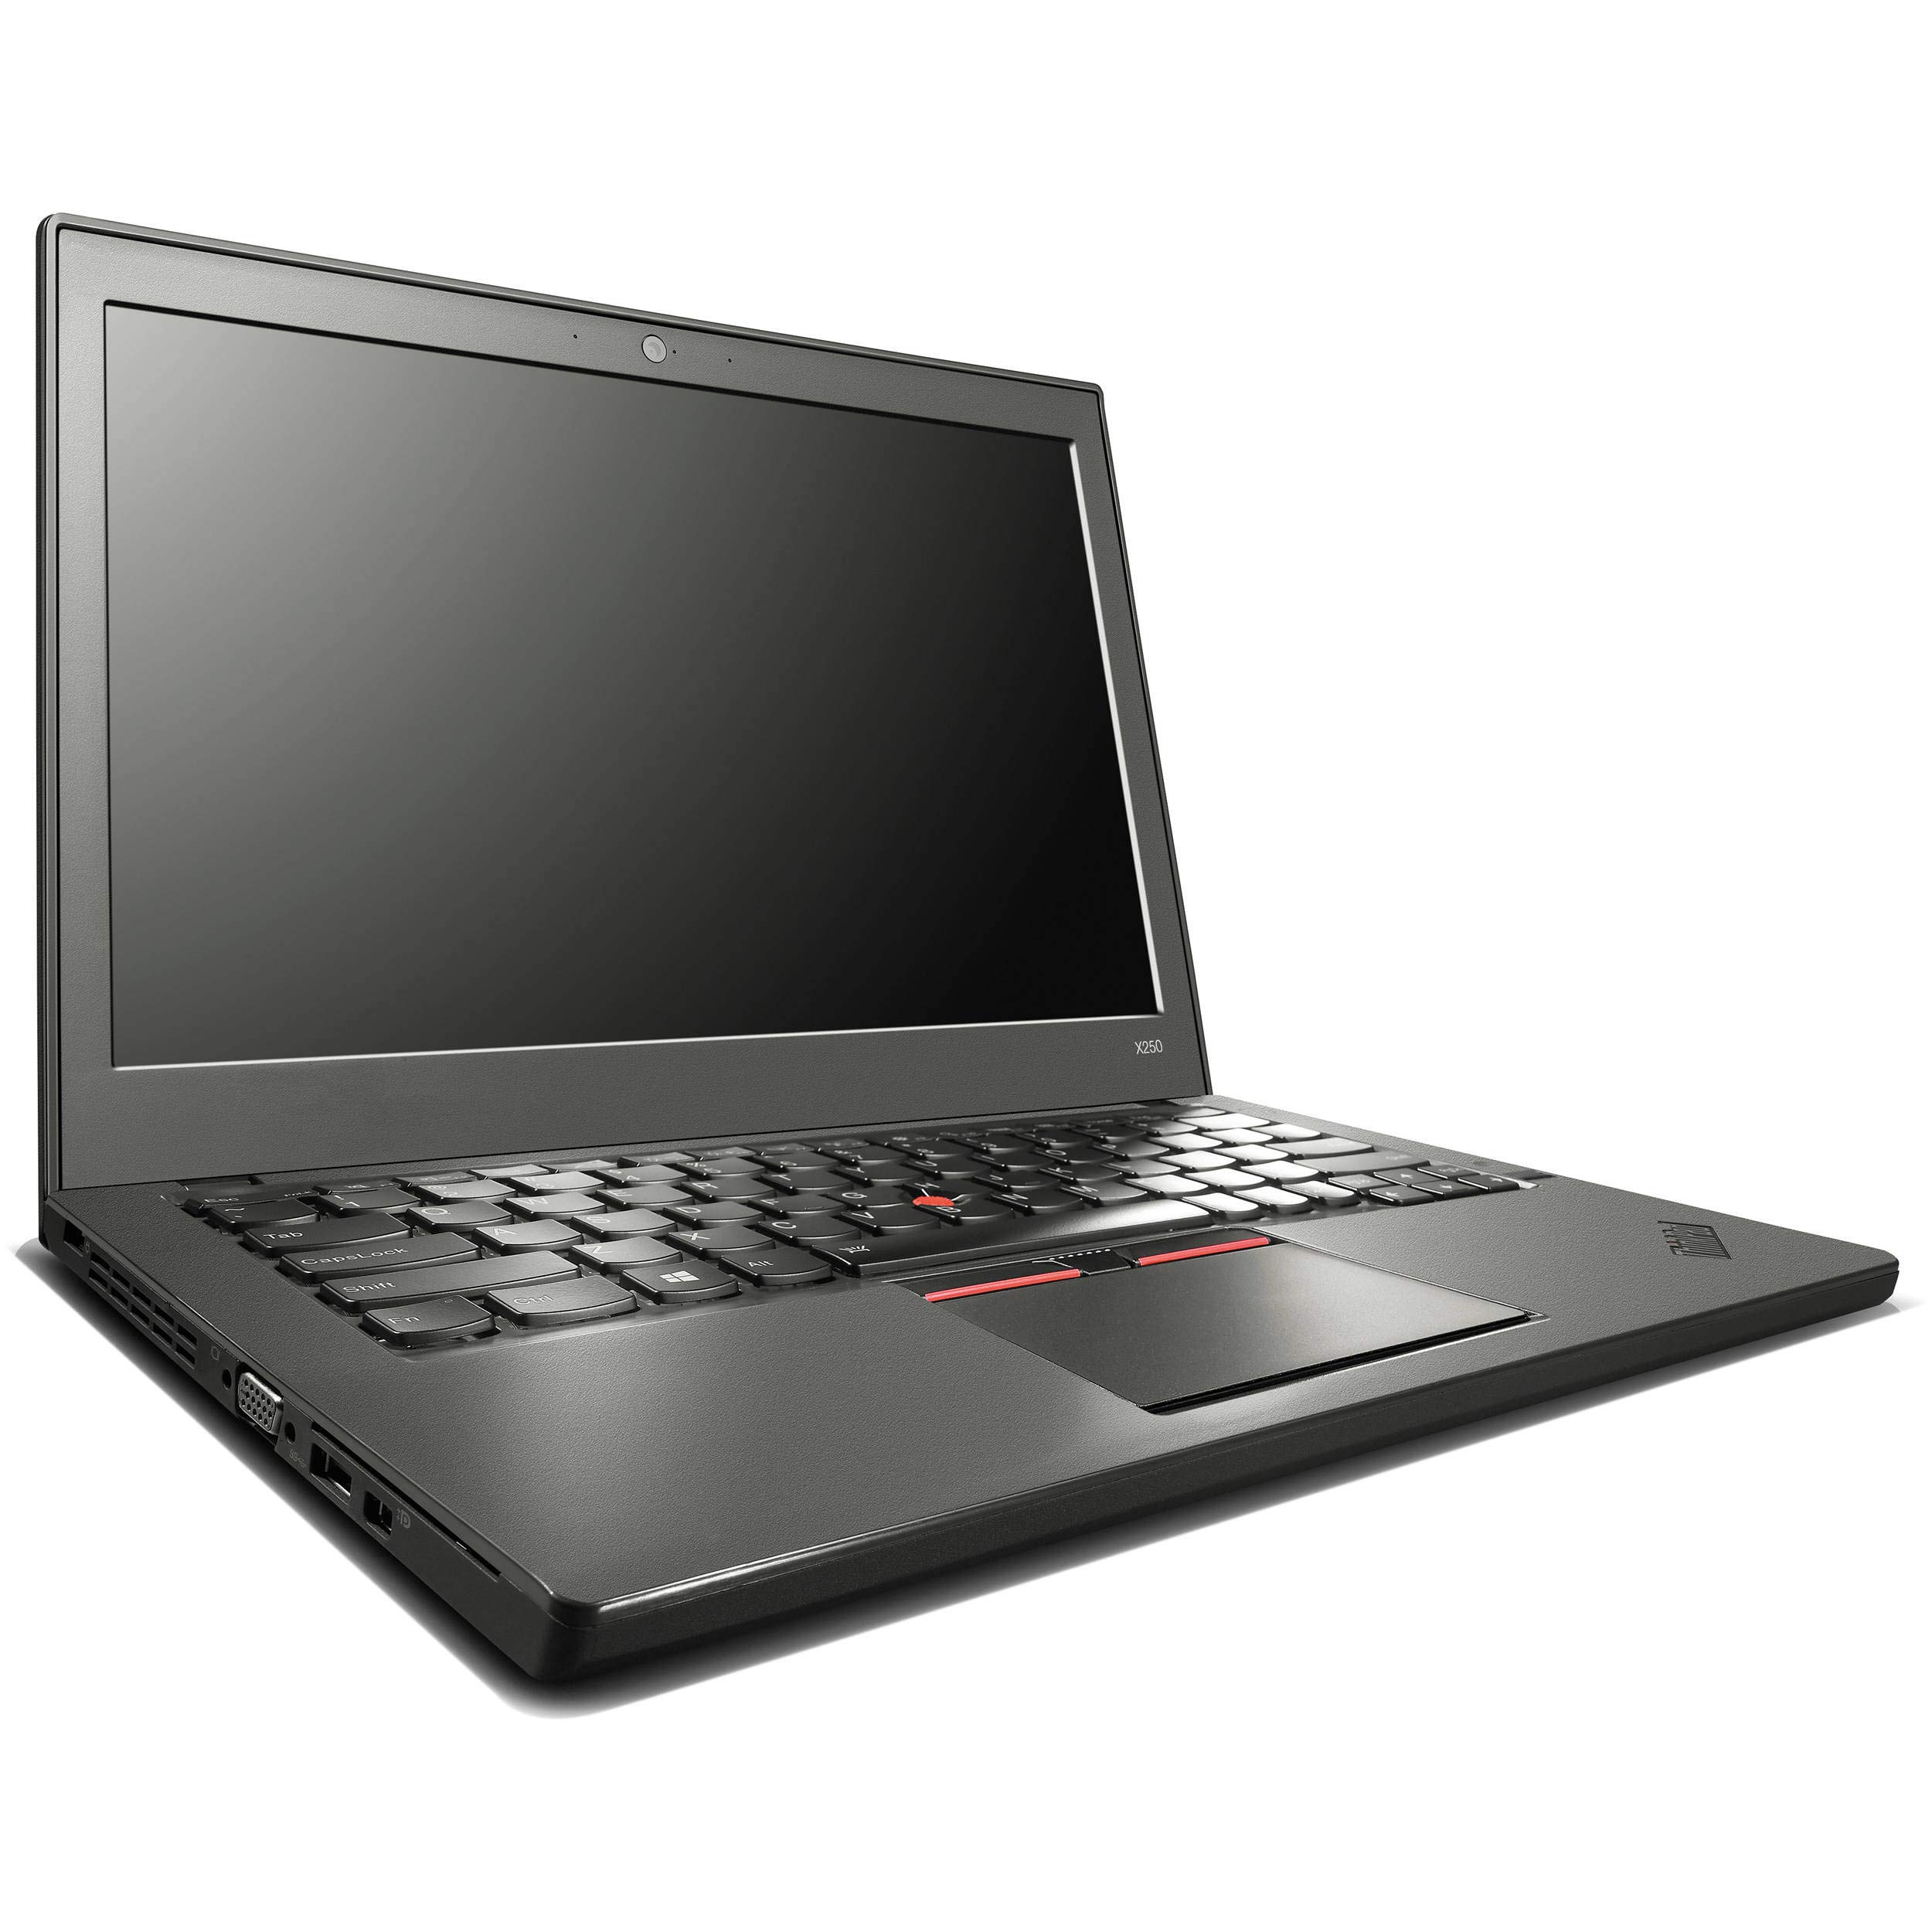 Lenovo ThinkPad X250 Ultrabook Notebook PC, 12.5in HD Display, Intel Core i5-5300U 2.3GHz, 8GB RAM, 128GB SSD, Windows 10 Pro (Renewed)